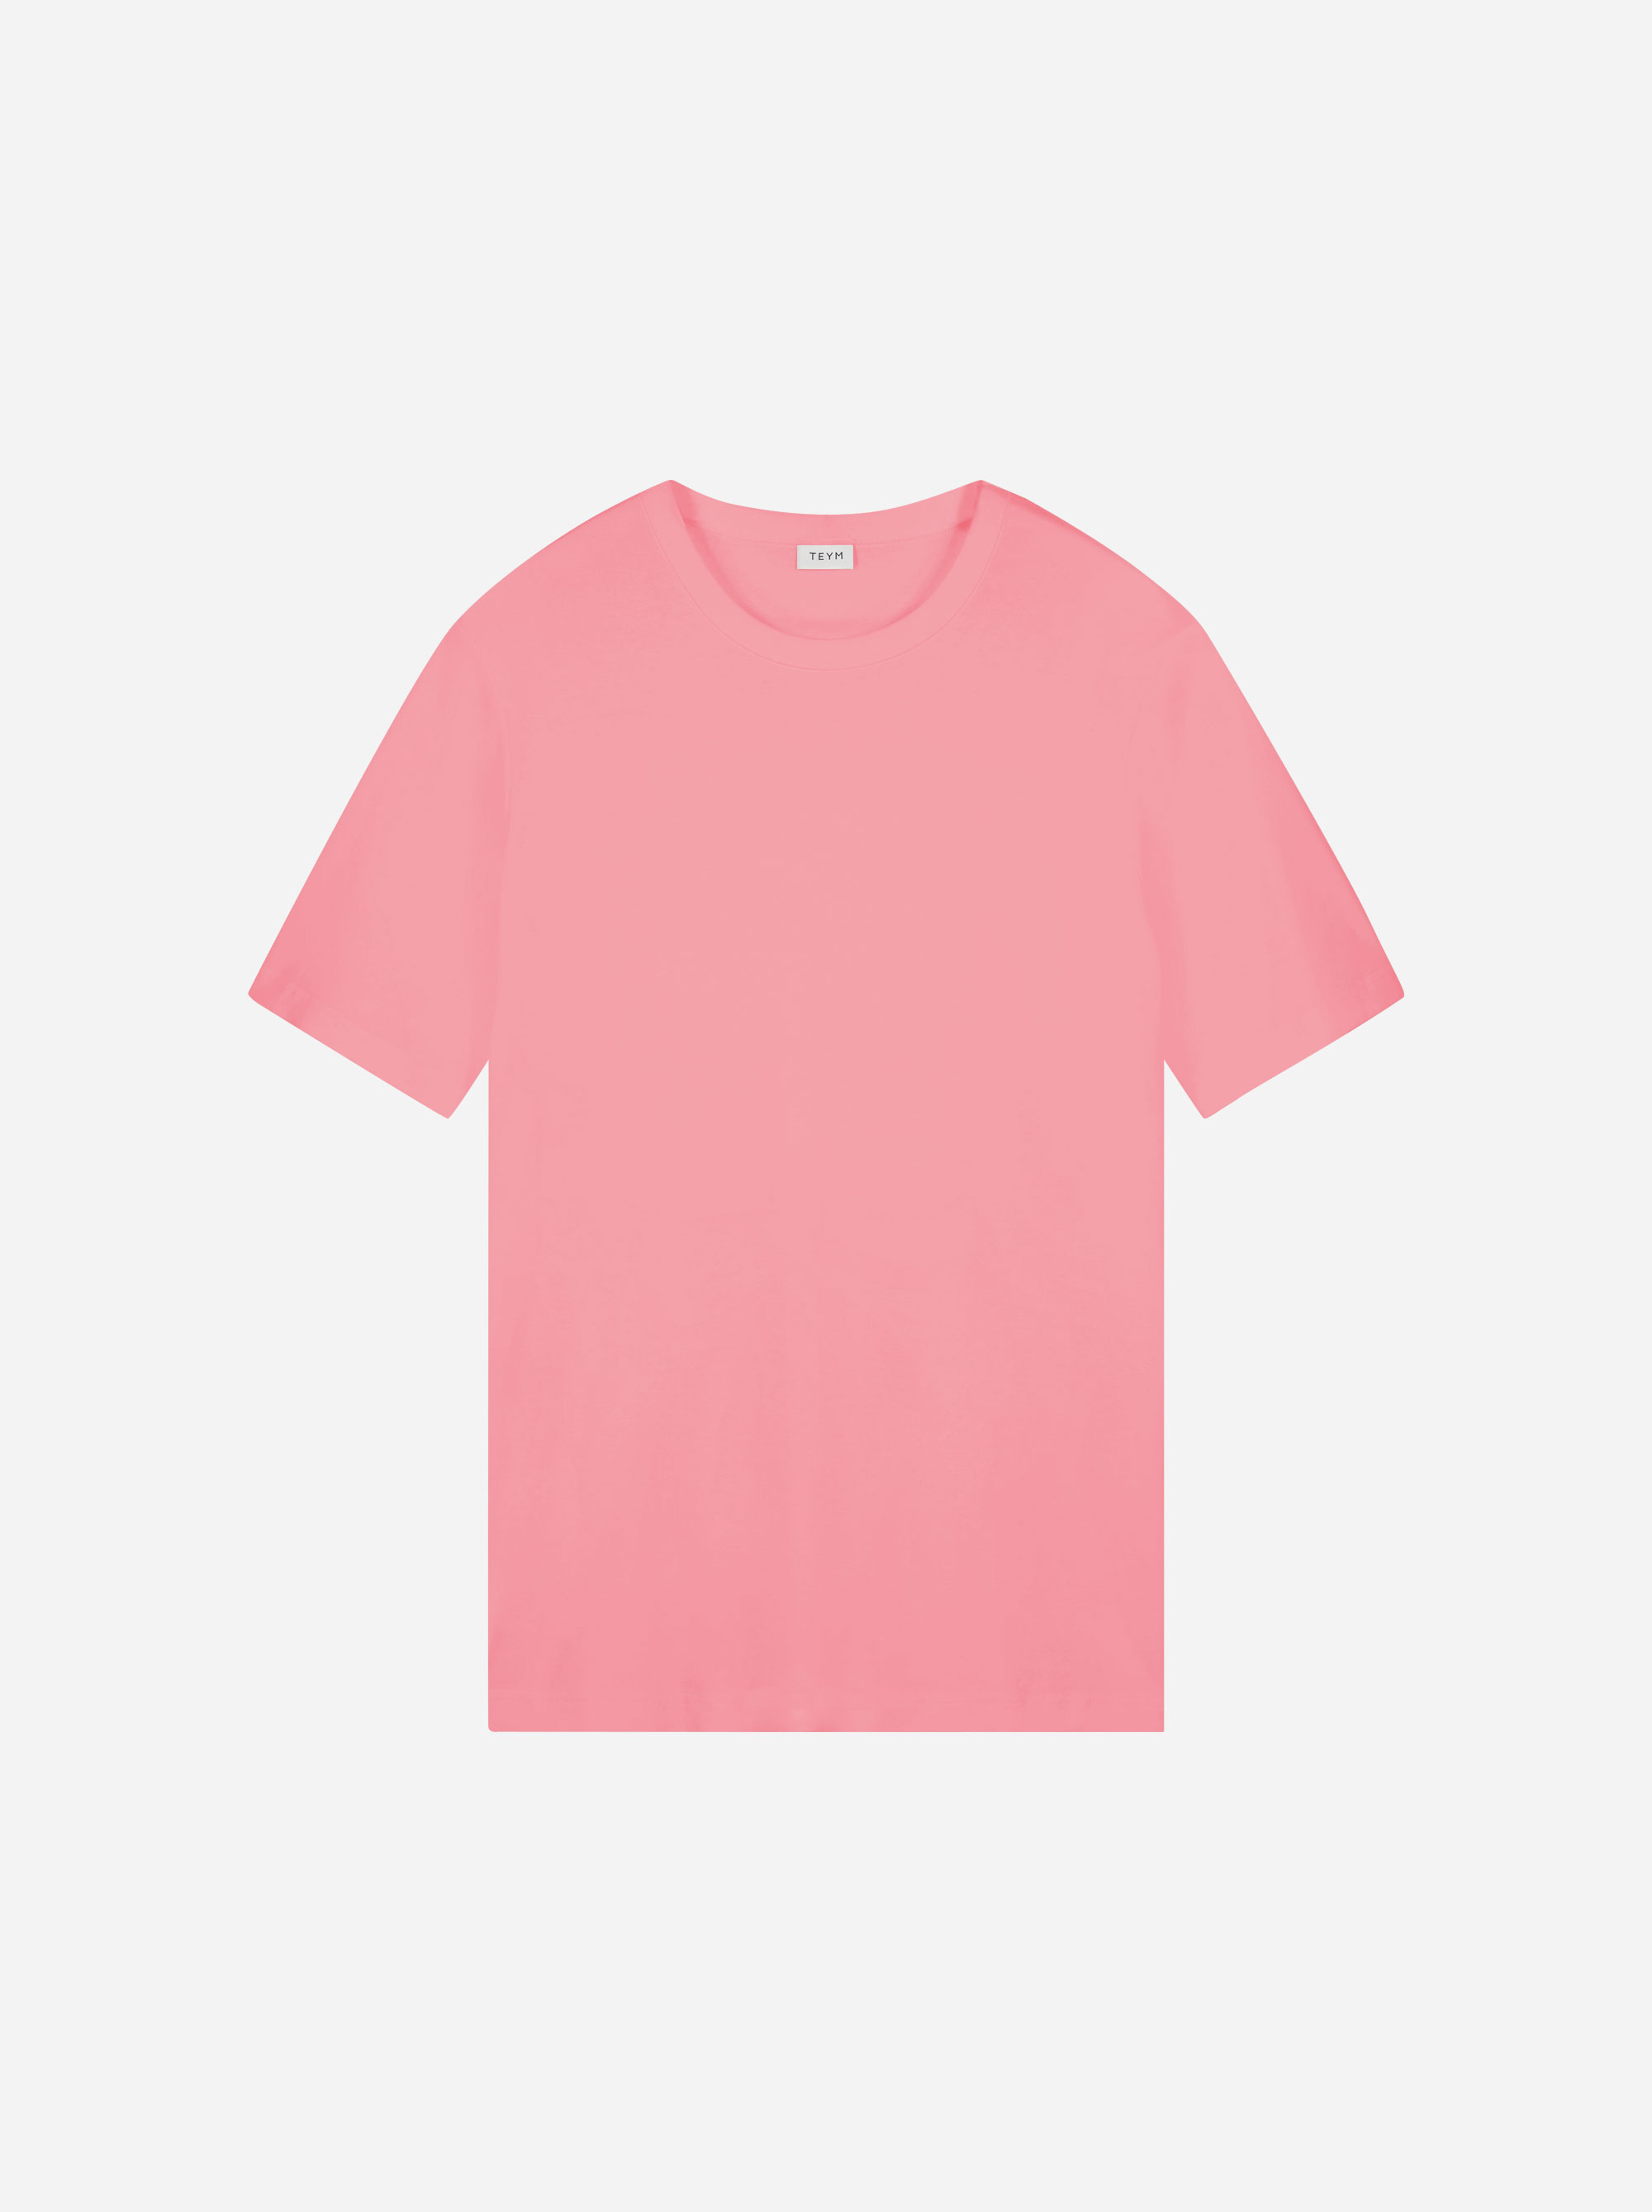 Teym - The T-Shirt - Men - Pink - 3